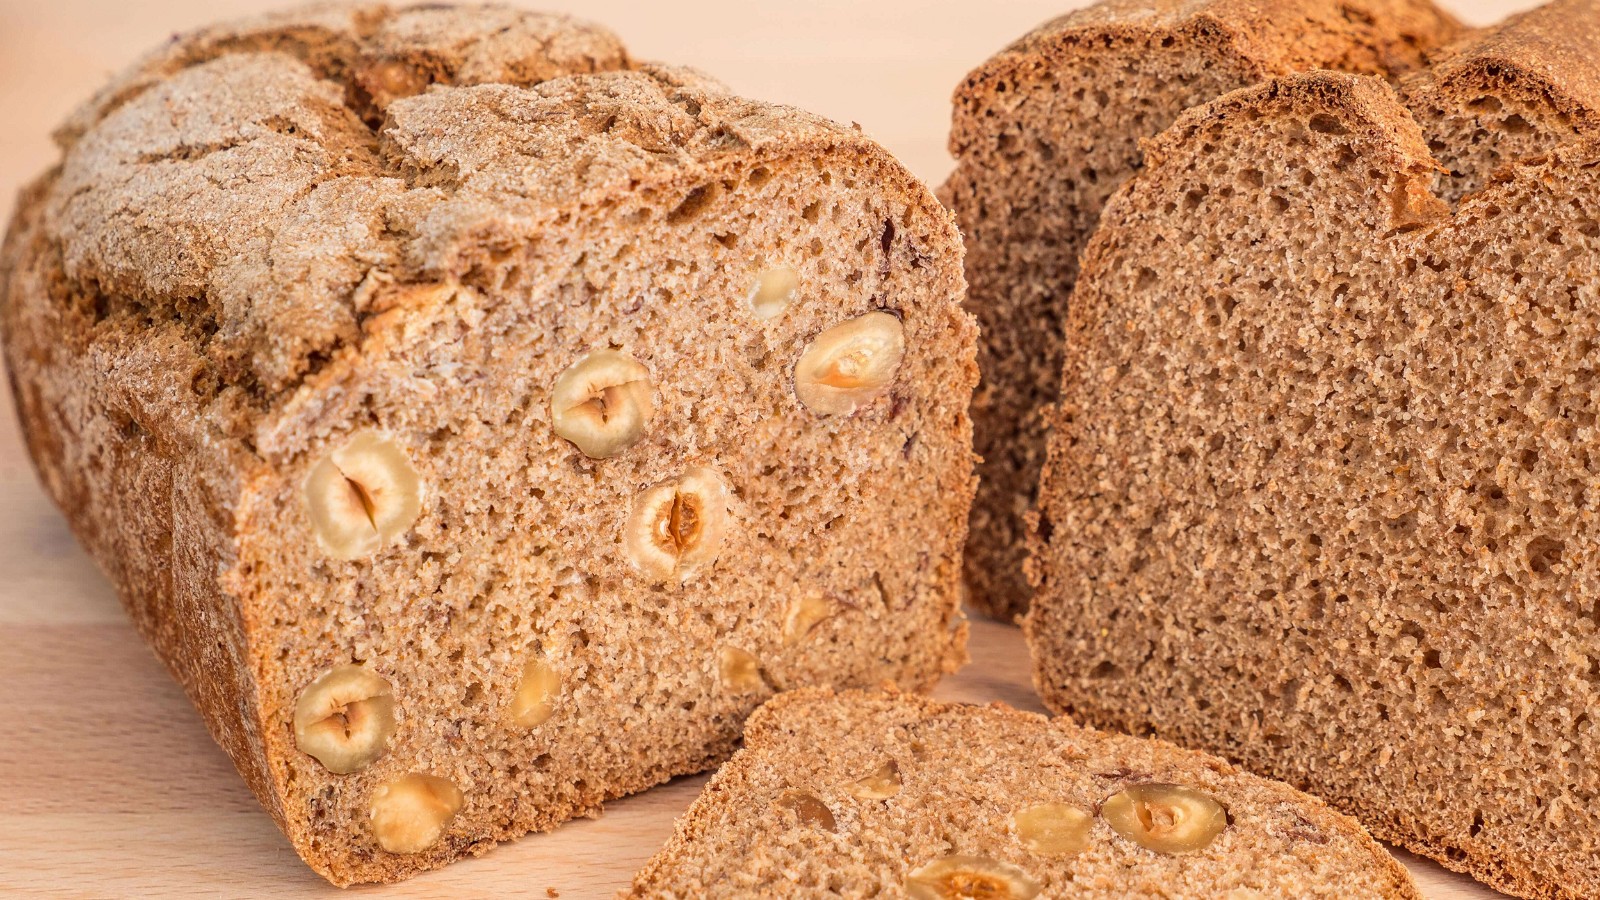 Image of Braunhirse-Brot mit Sauerteig